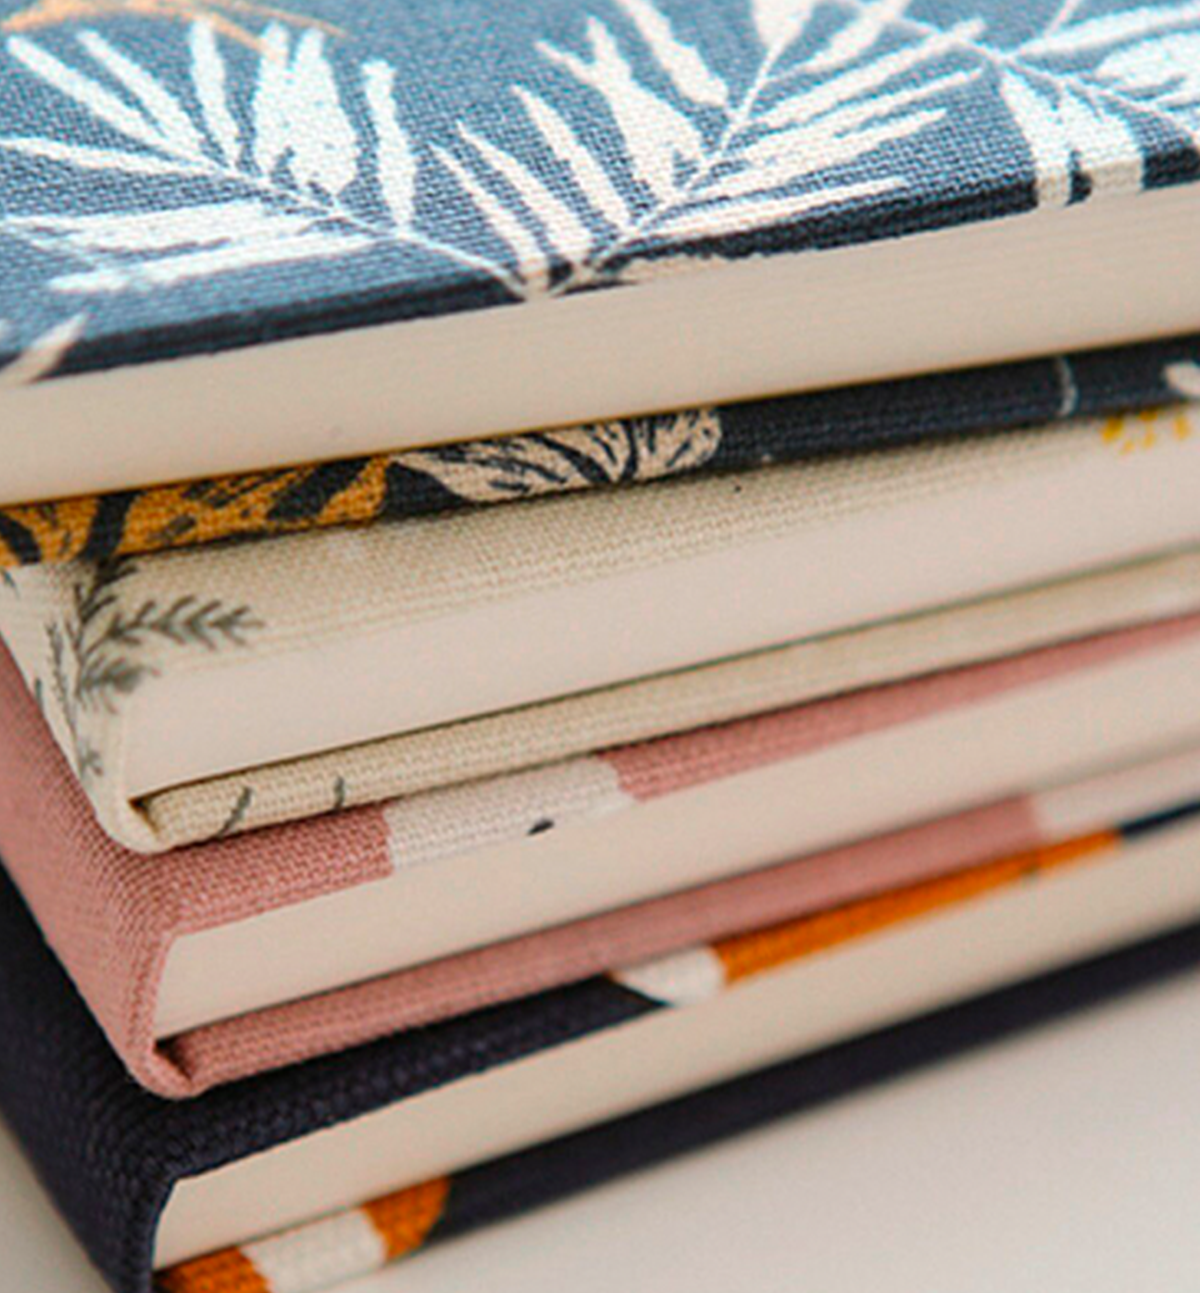 Azure Leaf Fabric Notebook